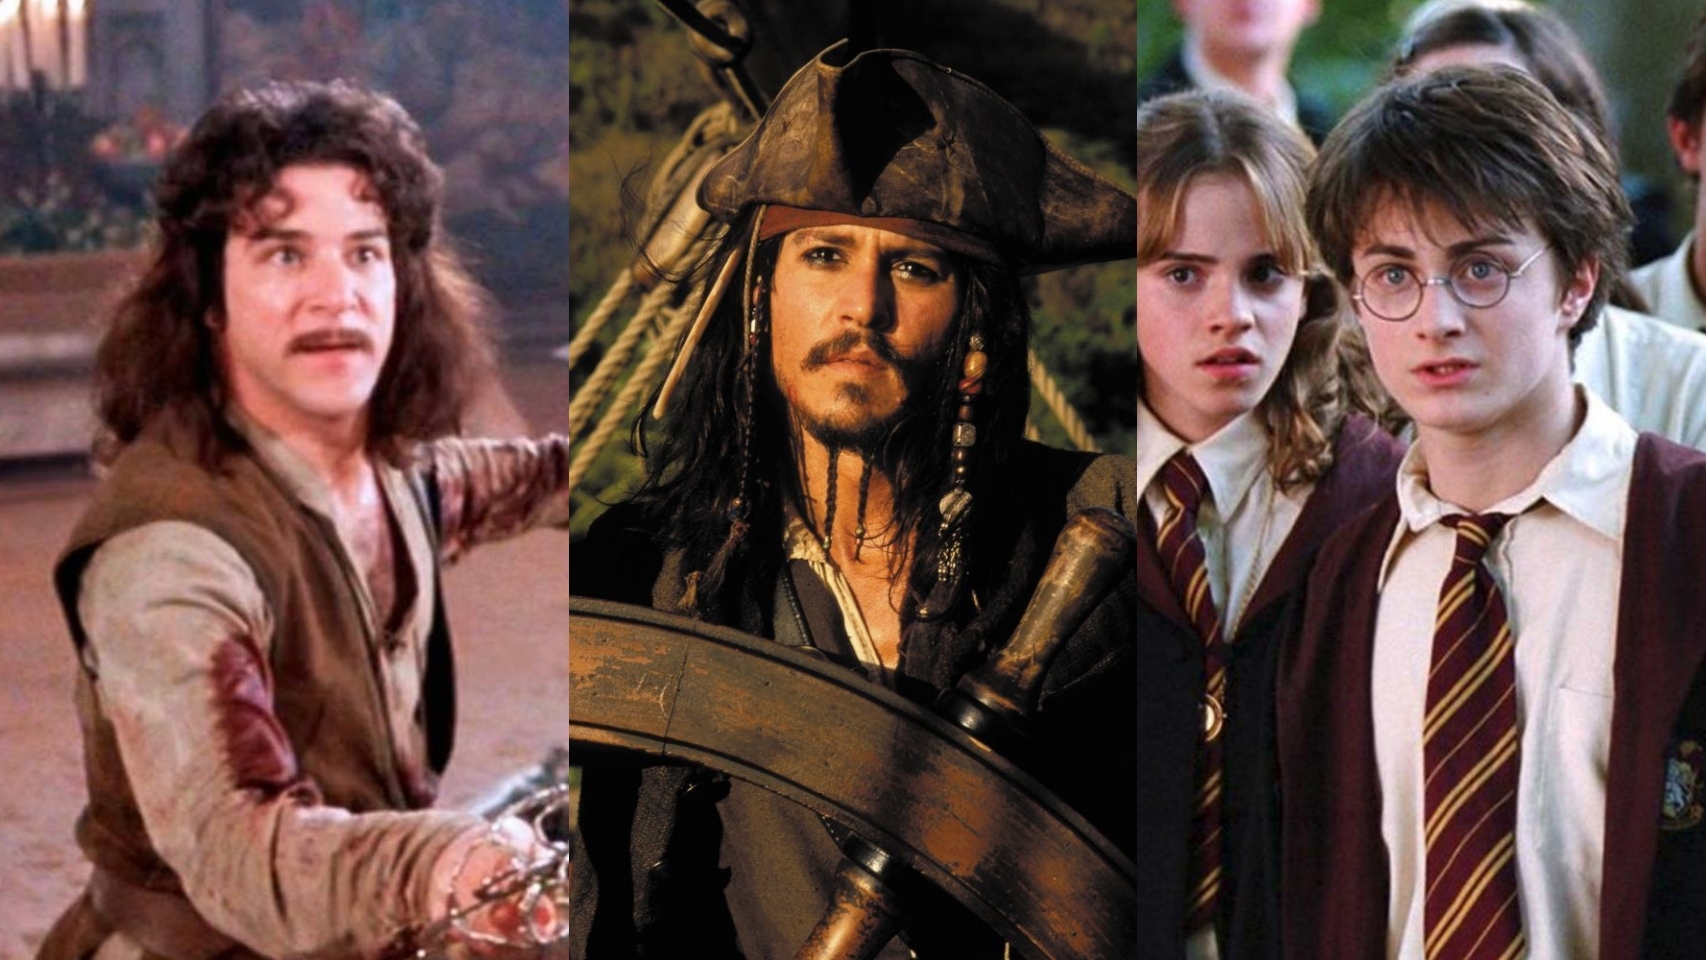 'La princesa prometida', la saga de 'Piratas del Caribe' y la saga de 'Harry Potter'.